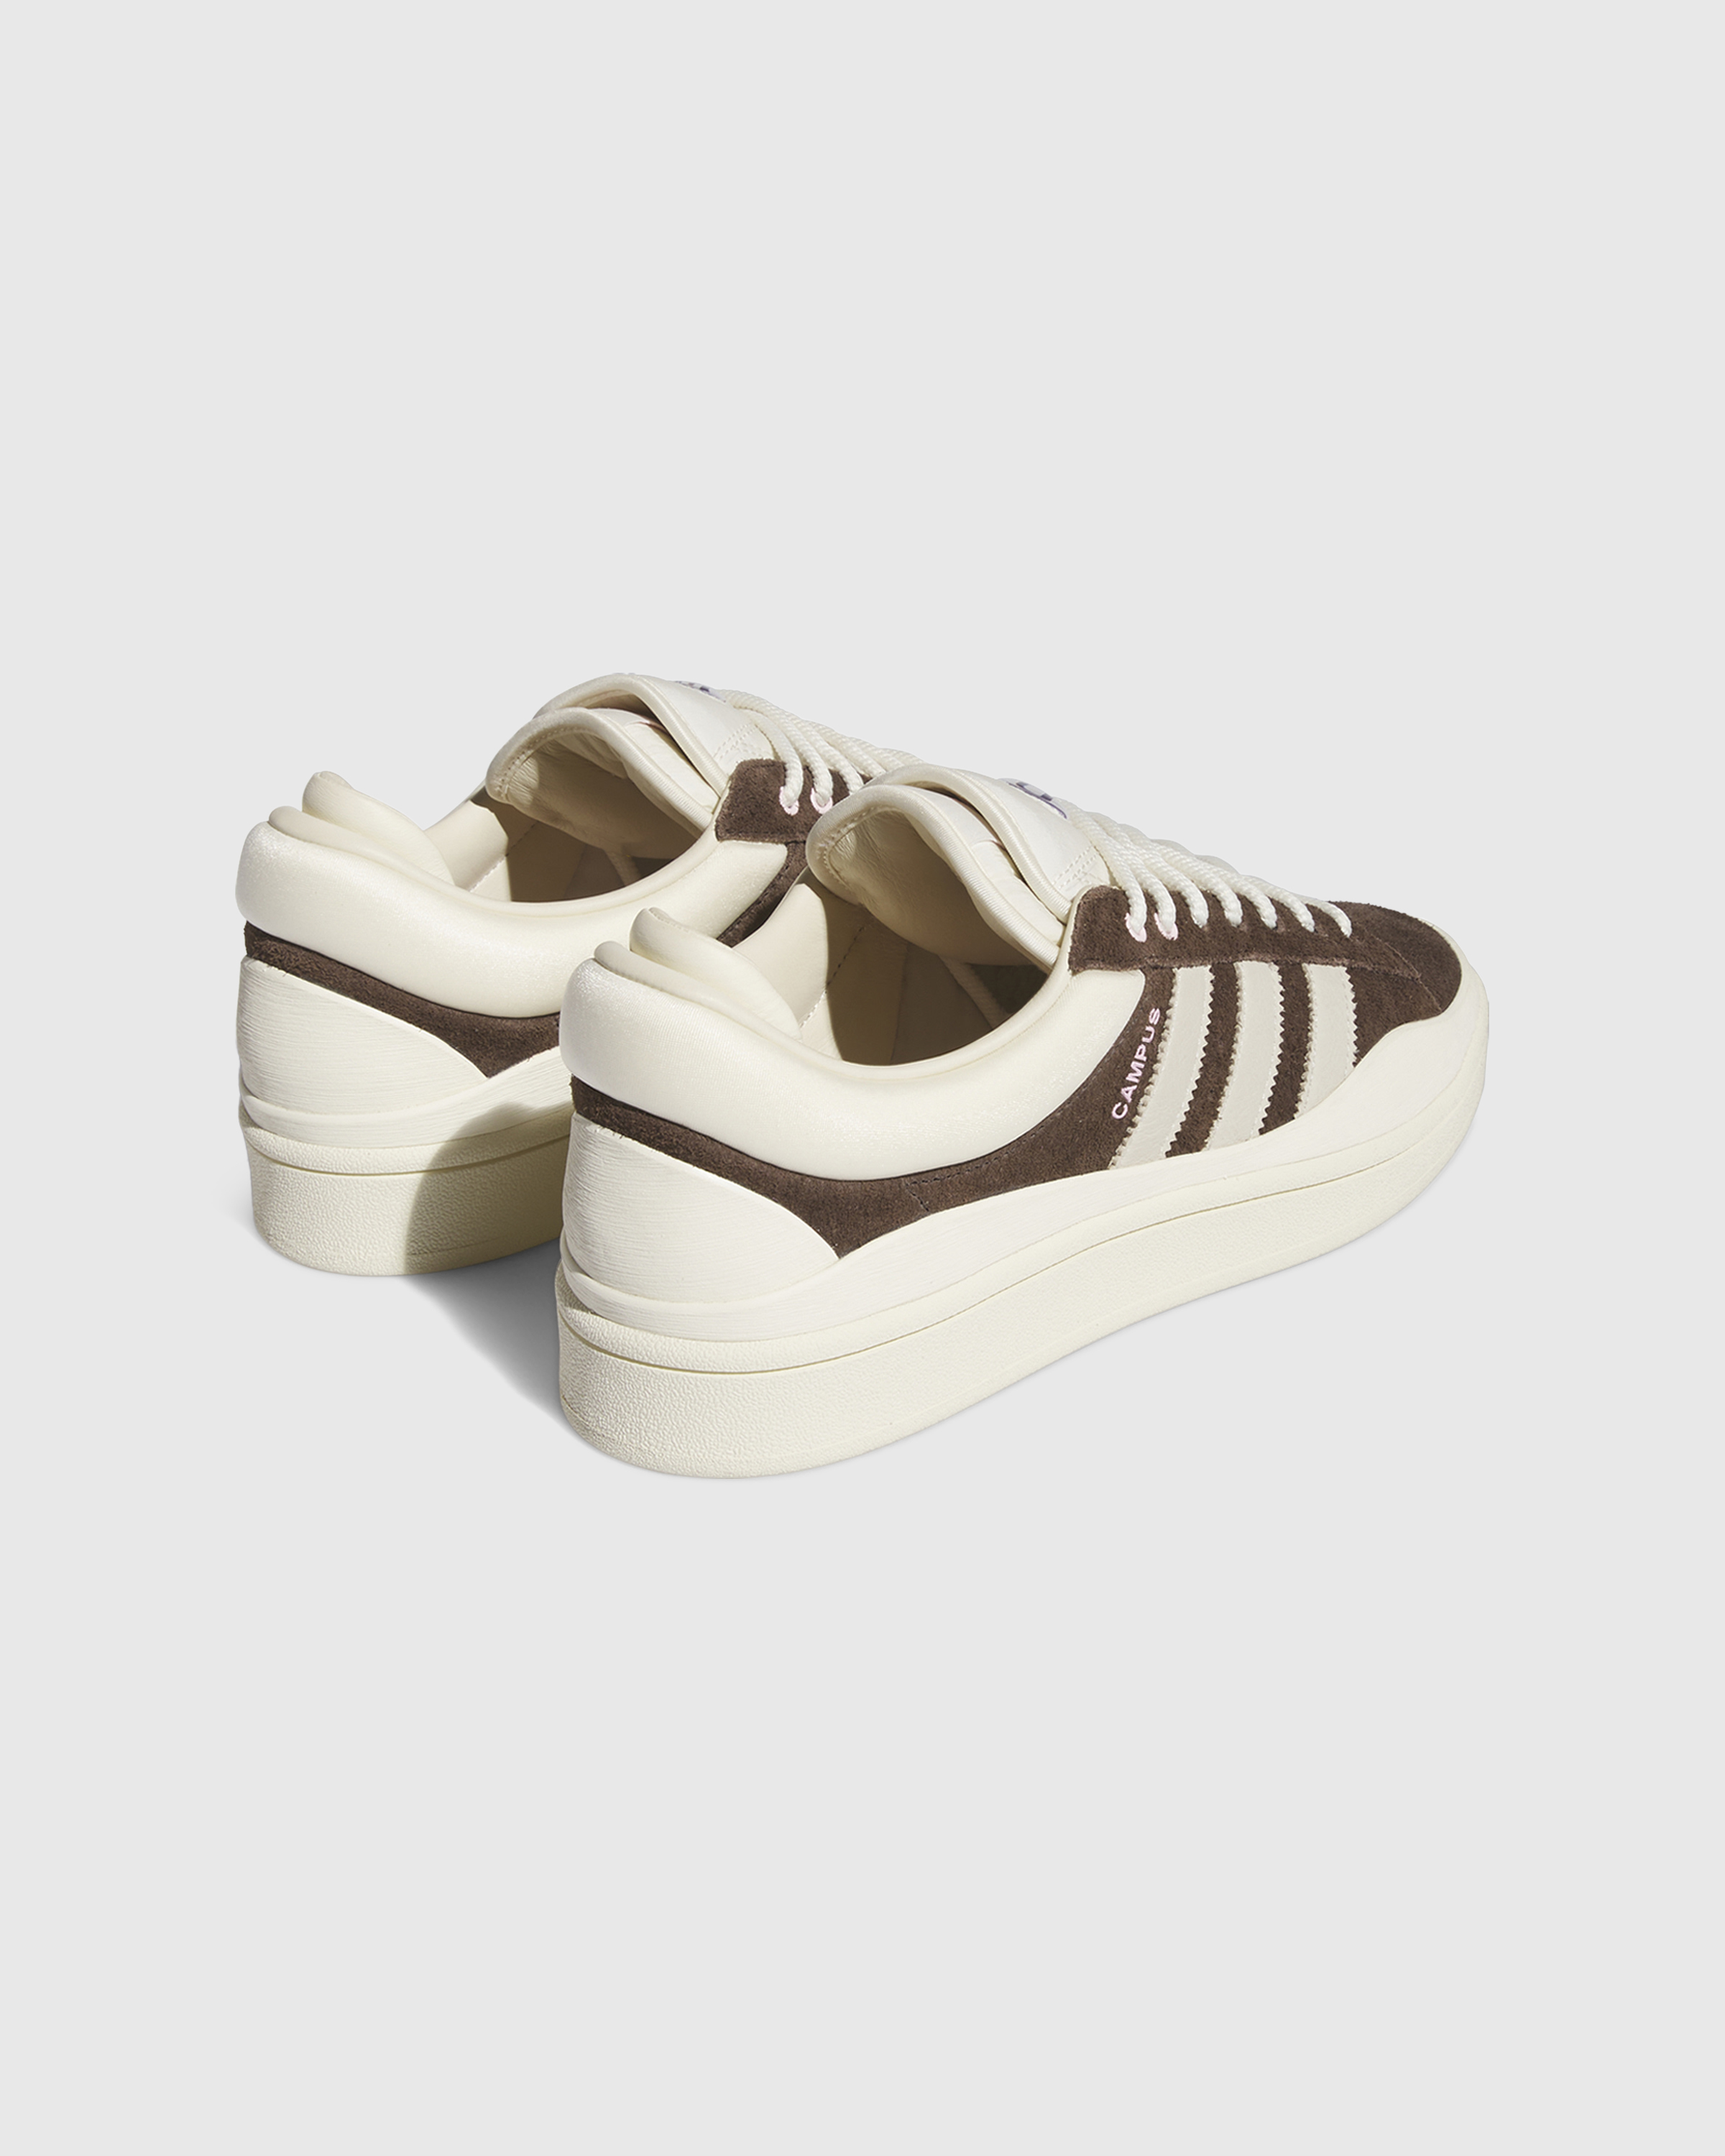 Adidas – Bad Bunny Campus Dark Brown - Sneakers - Brown - Image 4